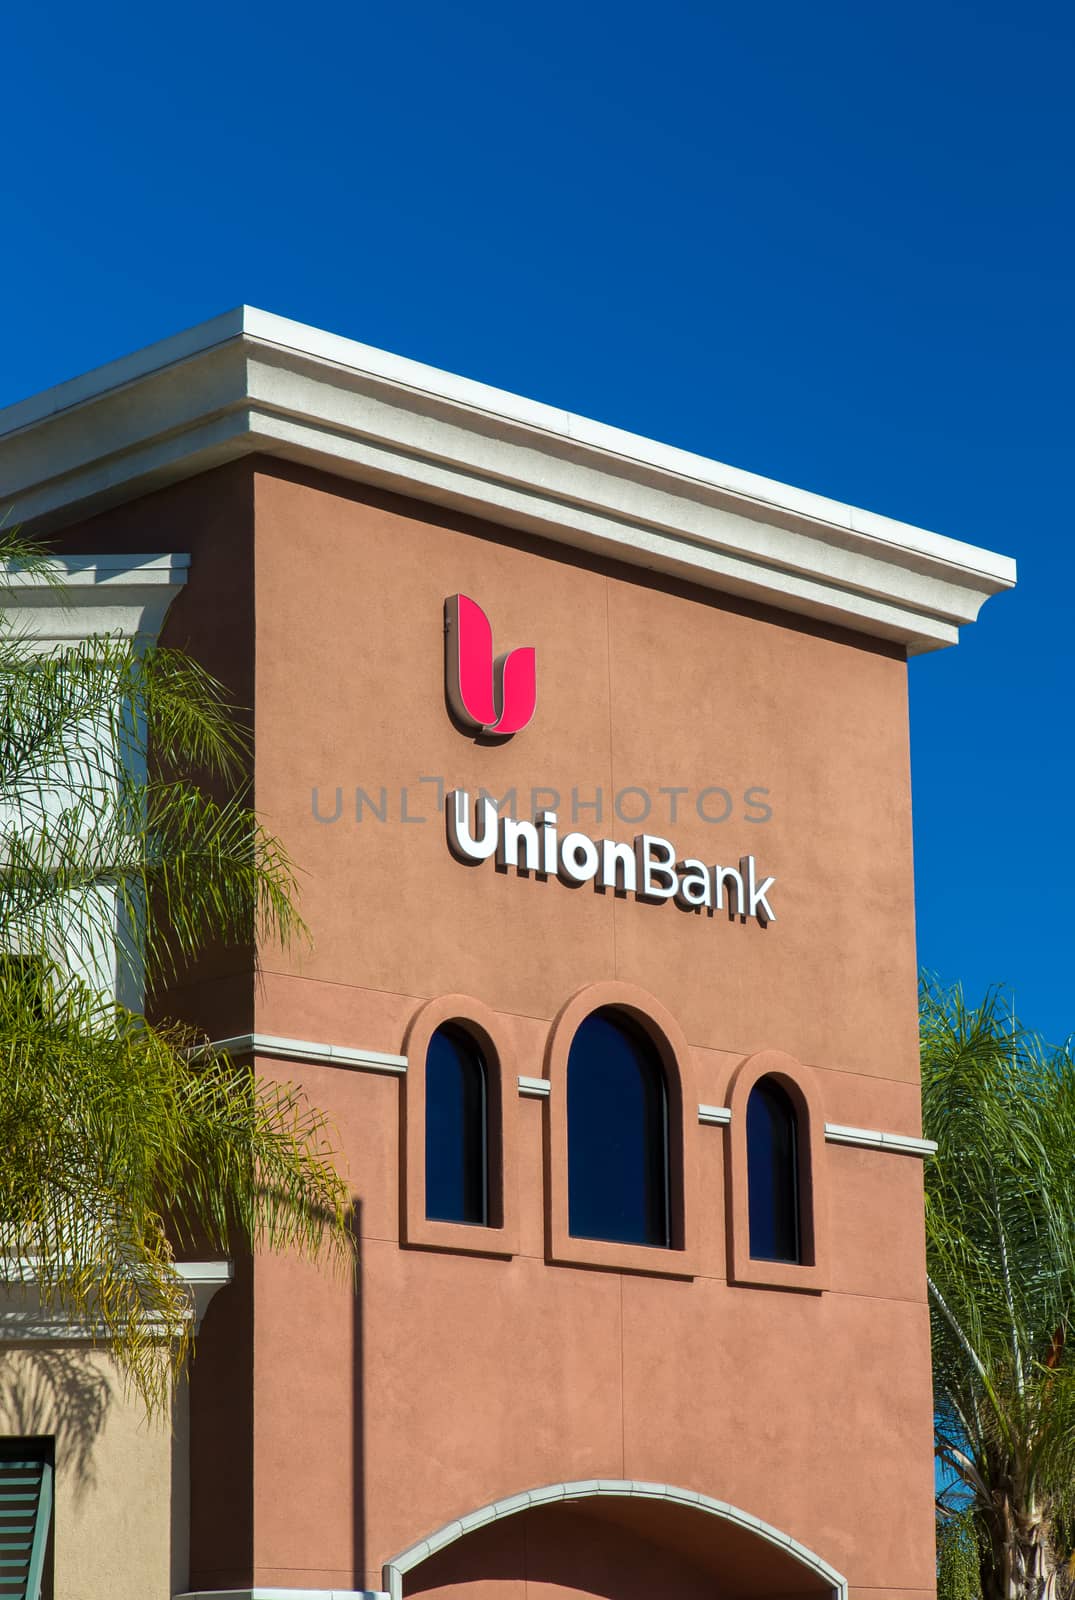 ARCADIA, CA/USA - NOVEMBER 22, 2015: Original UnionBank exterior and logo. UnionBank is abank with branches in California, Washington and Oregon.